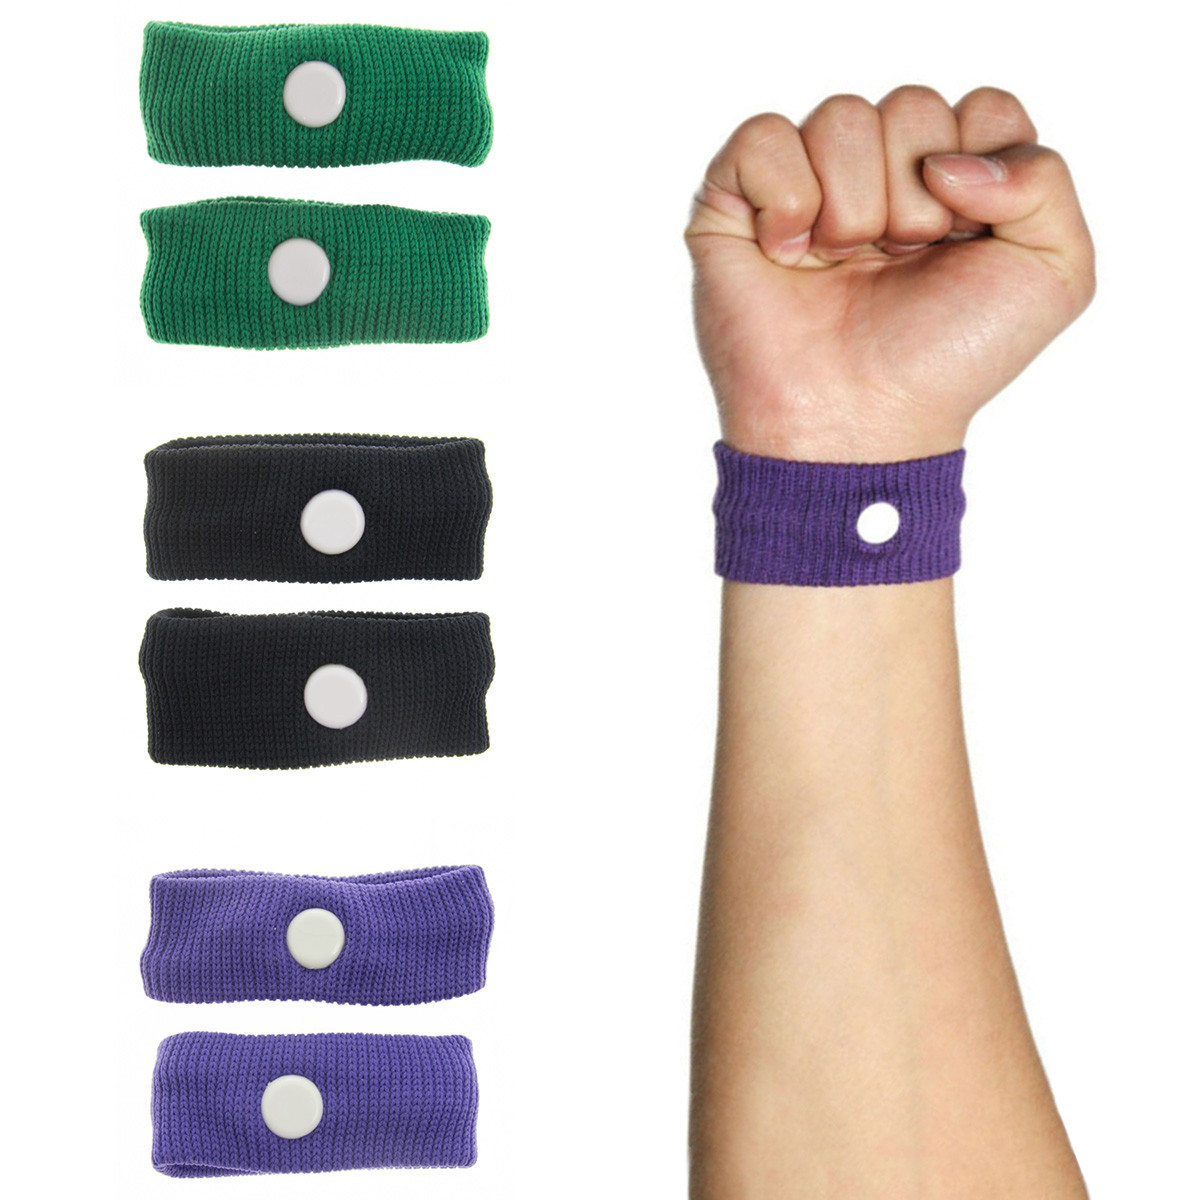 Bracelet For Motion Sickness
 3 Pairs CVS Acupressure Motion Sickness Wristbands Travel